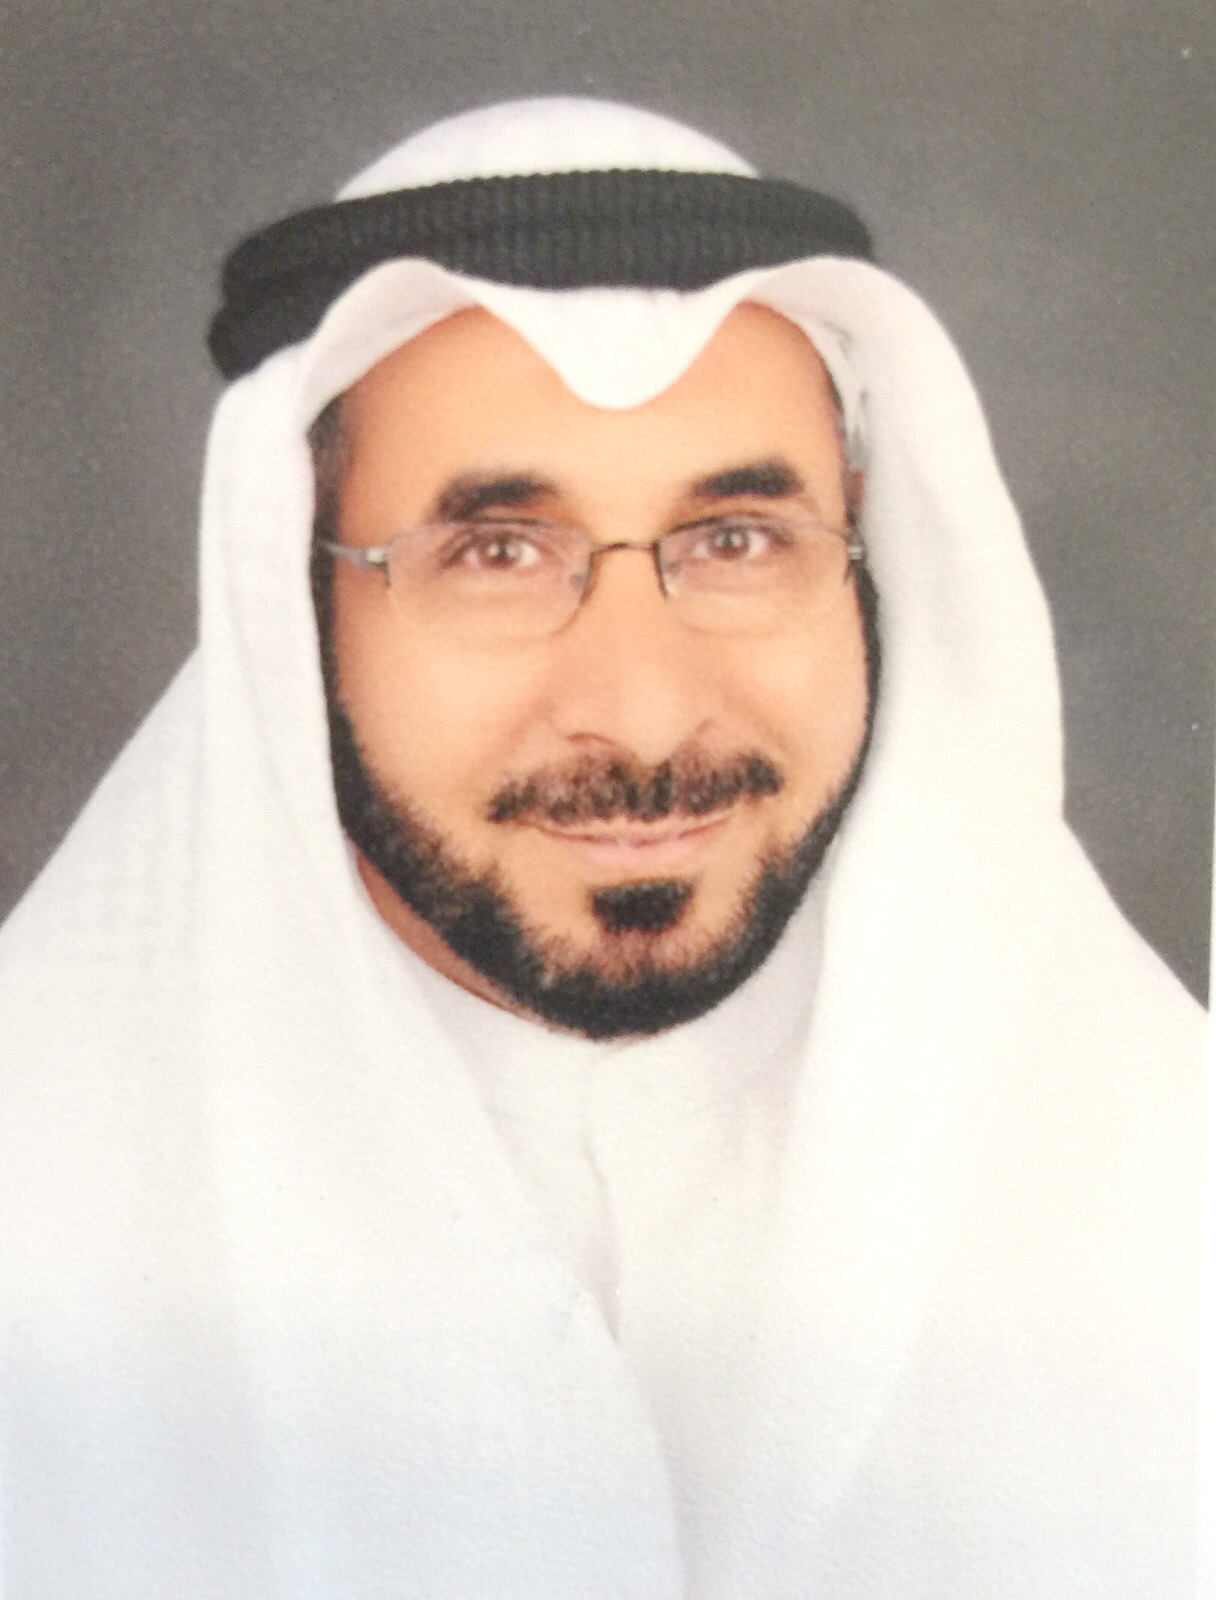 The Directorate General of Civil Aviation (DGCA) Yousef Al-Fozan